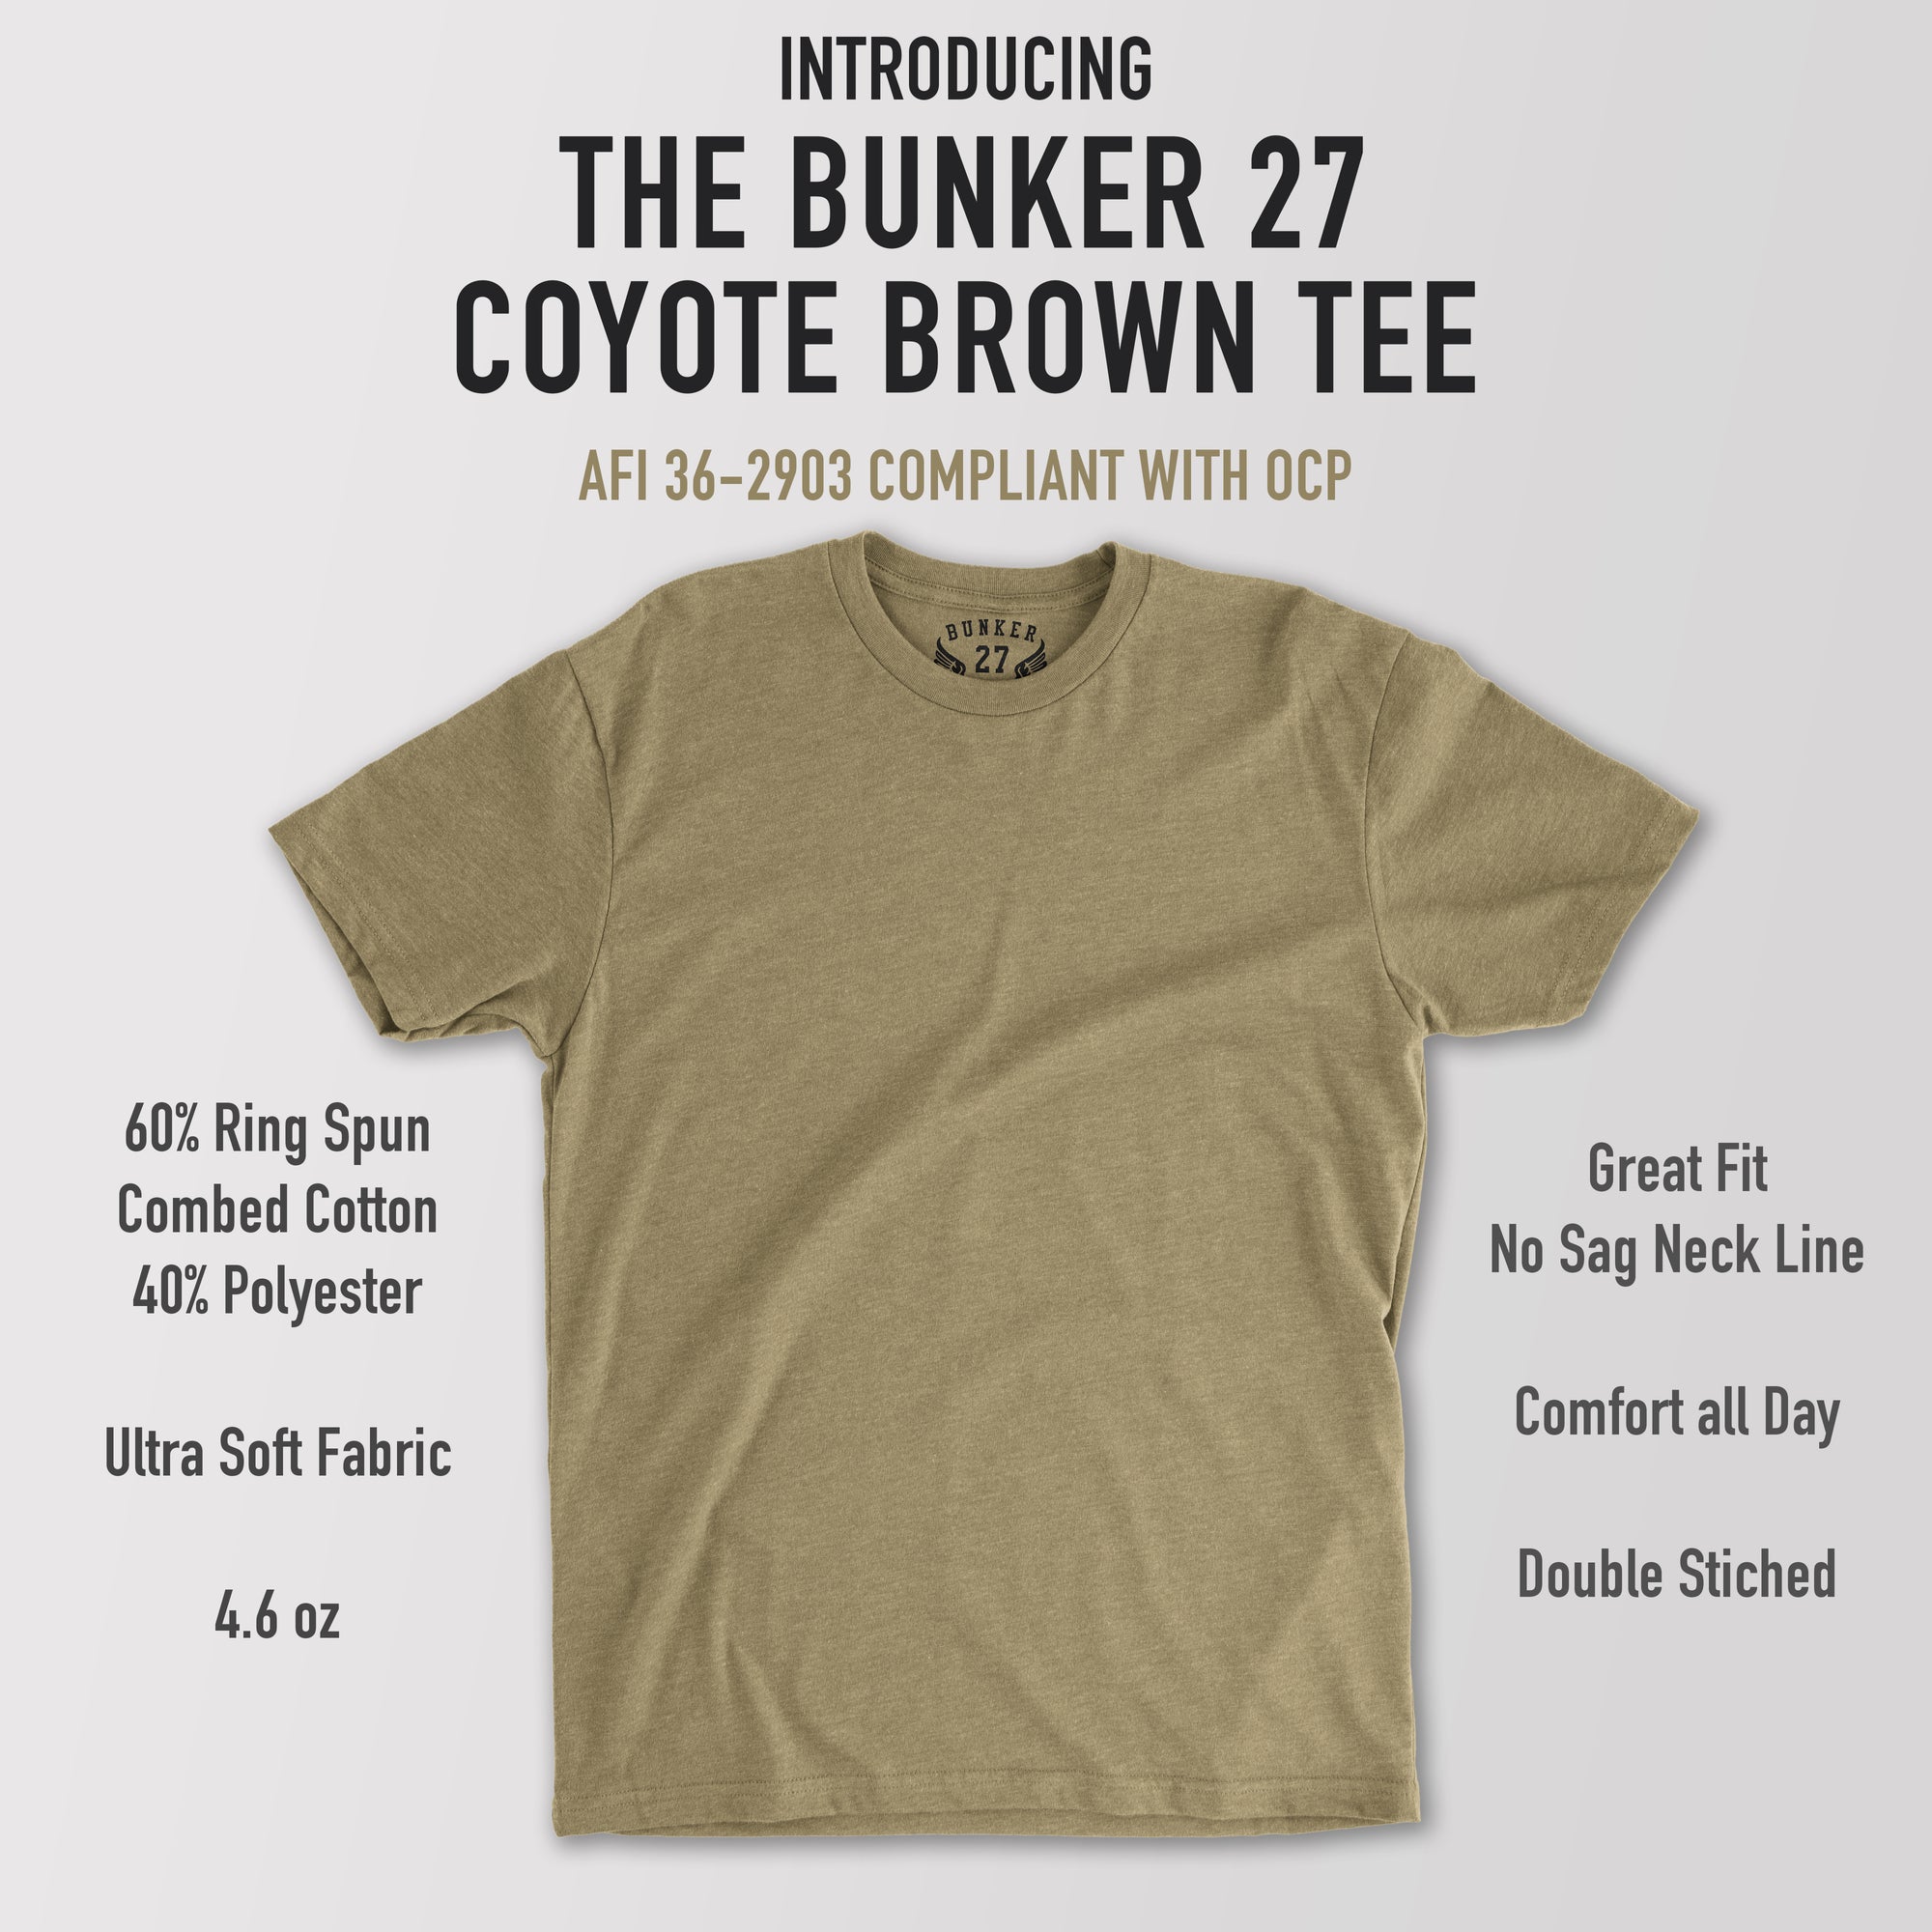 3-Pack Bunker 27 Coyote Brown T-Shirt AFI 36-2903, Bunker 27